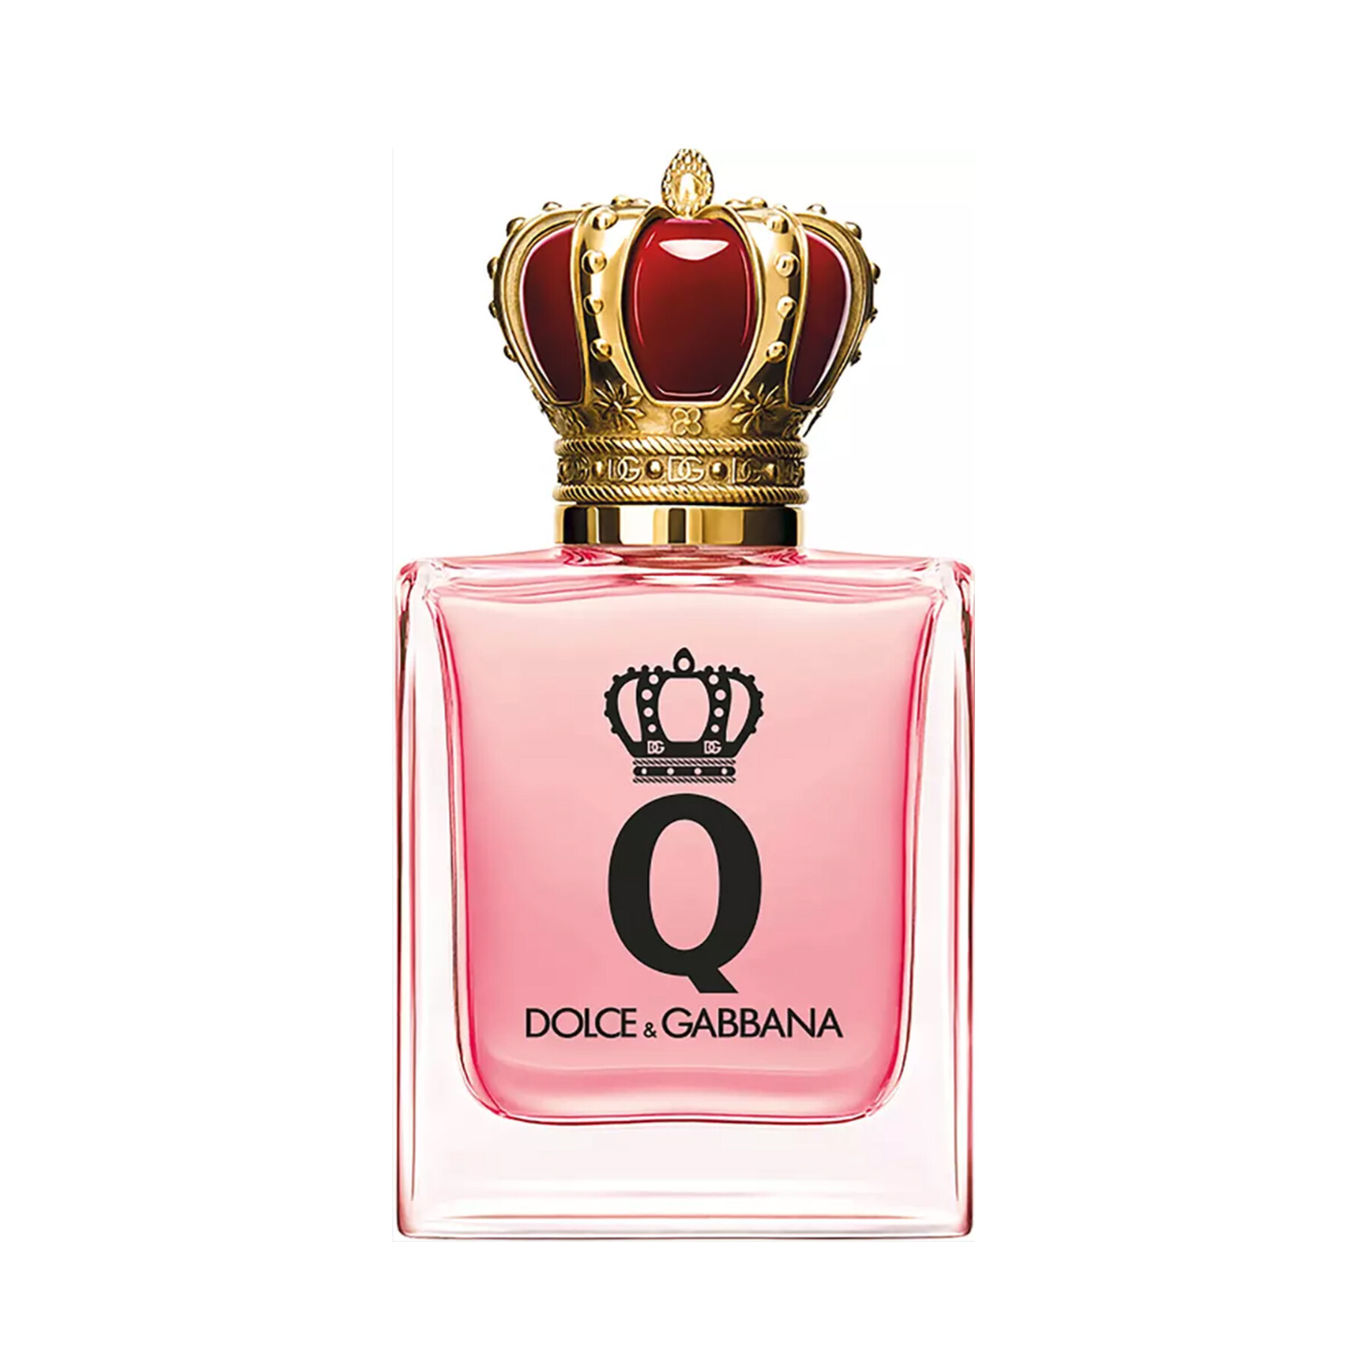 Dolce&Gabbana Q Eau de Parfum 50ml Damen von Dolce&Gabbana